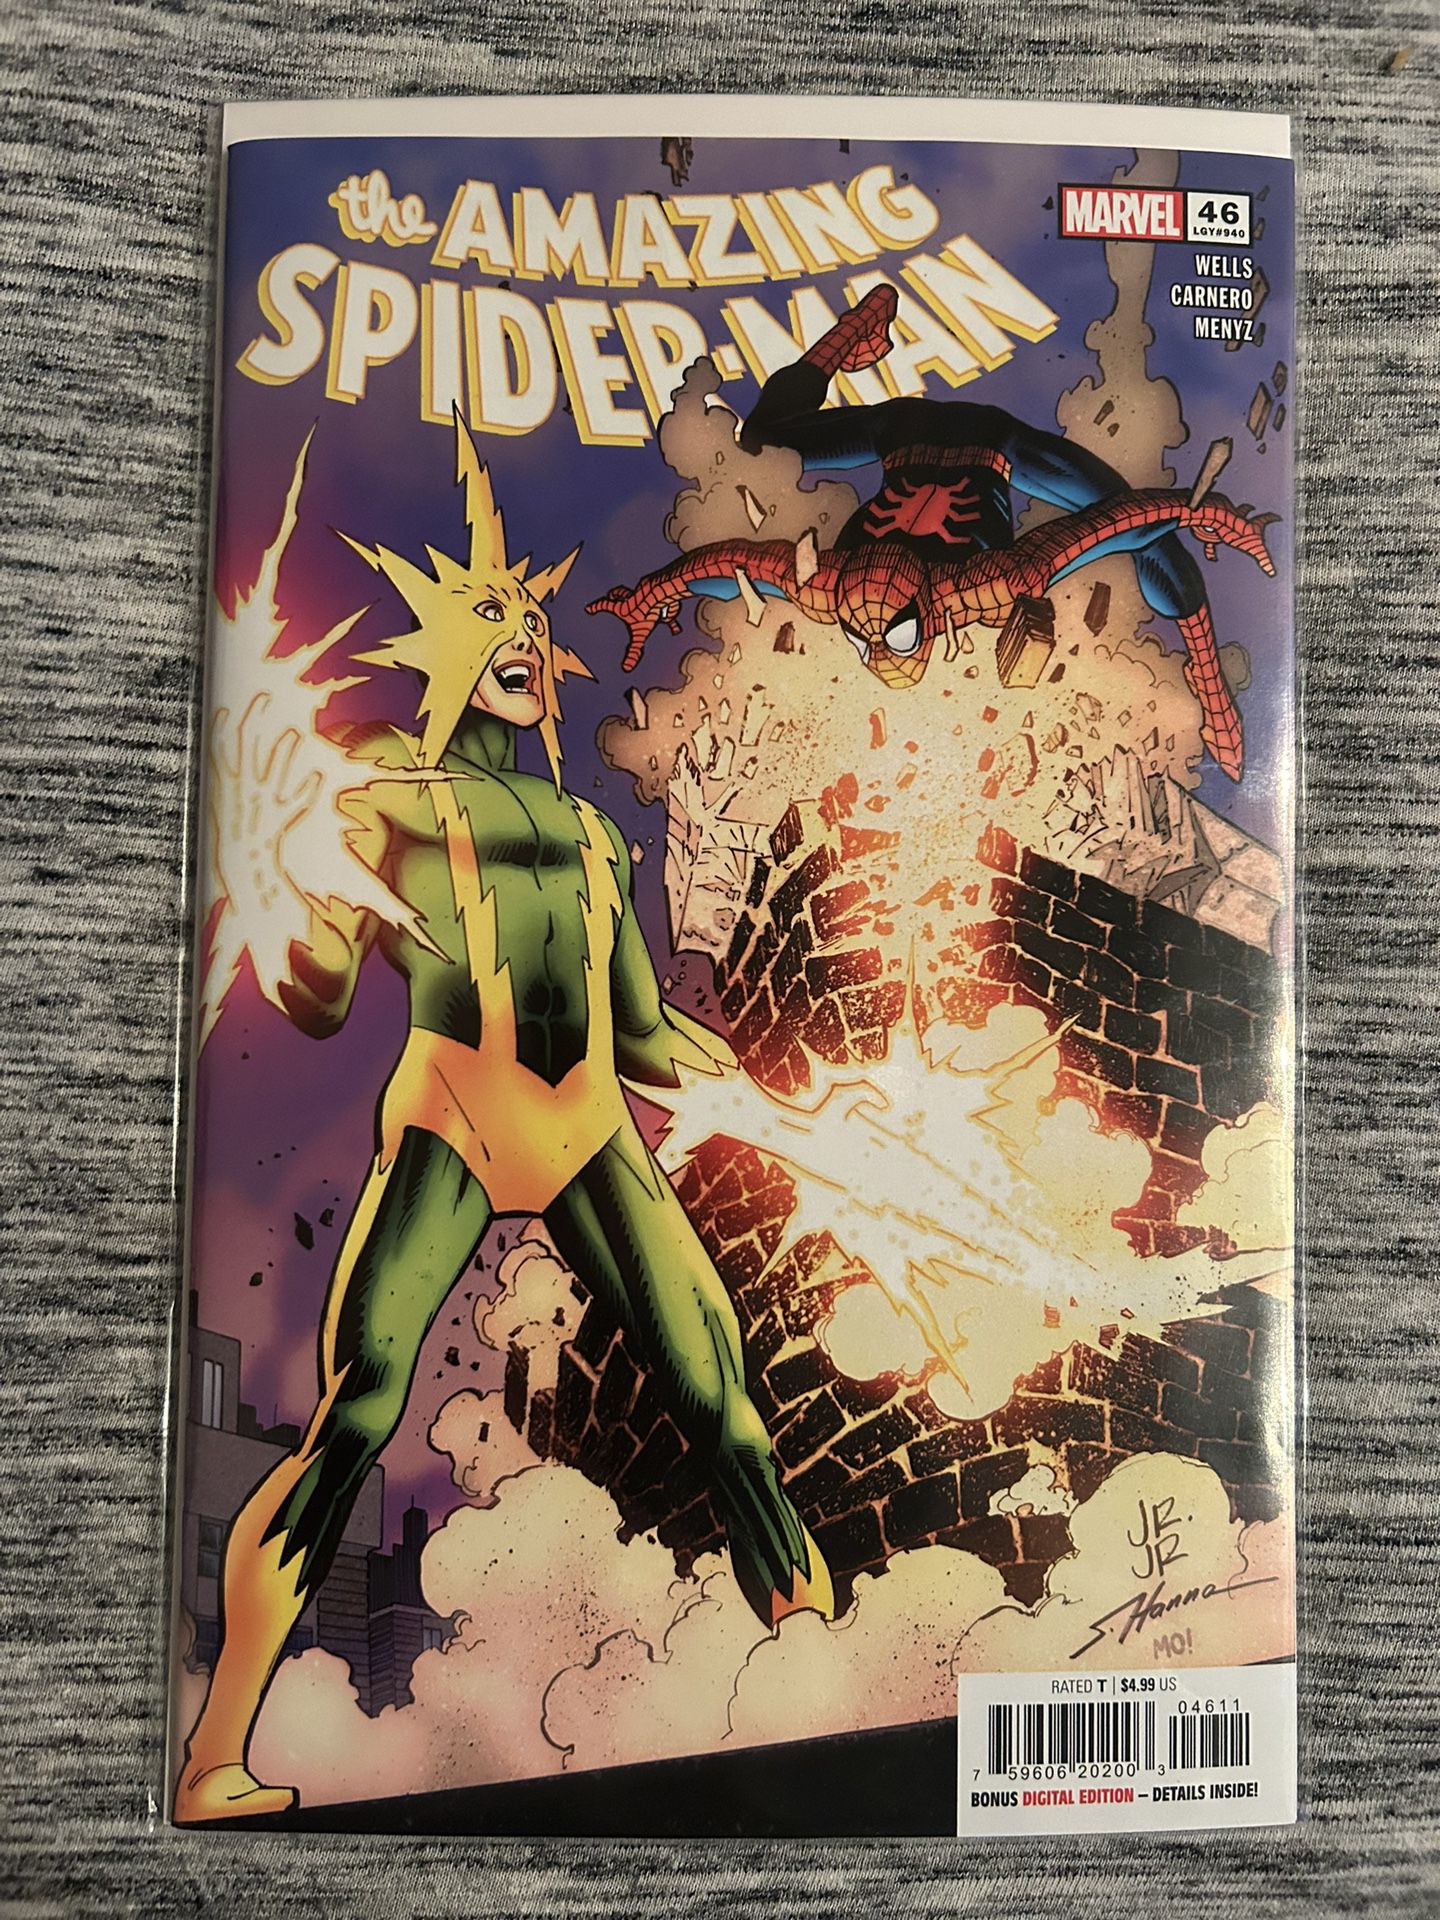 The Amazing Spider-Man #46 (Marvel Comics)